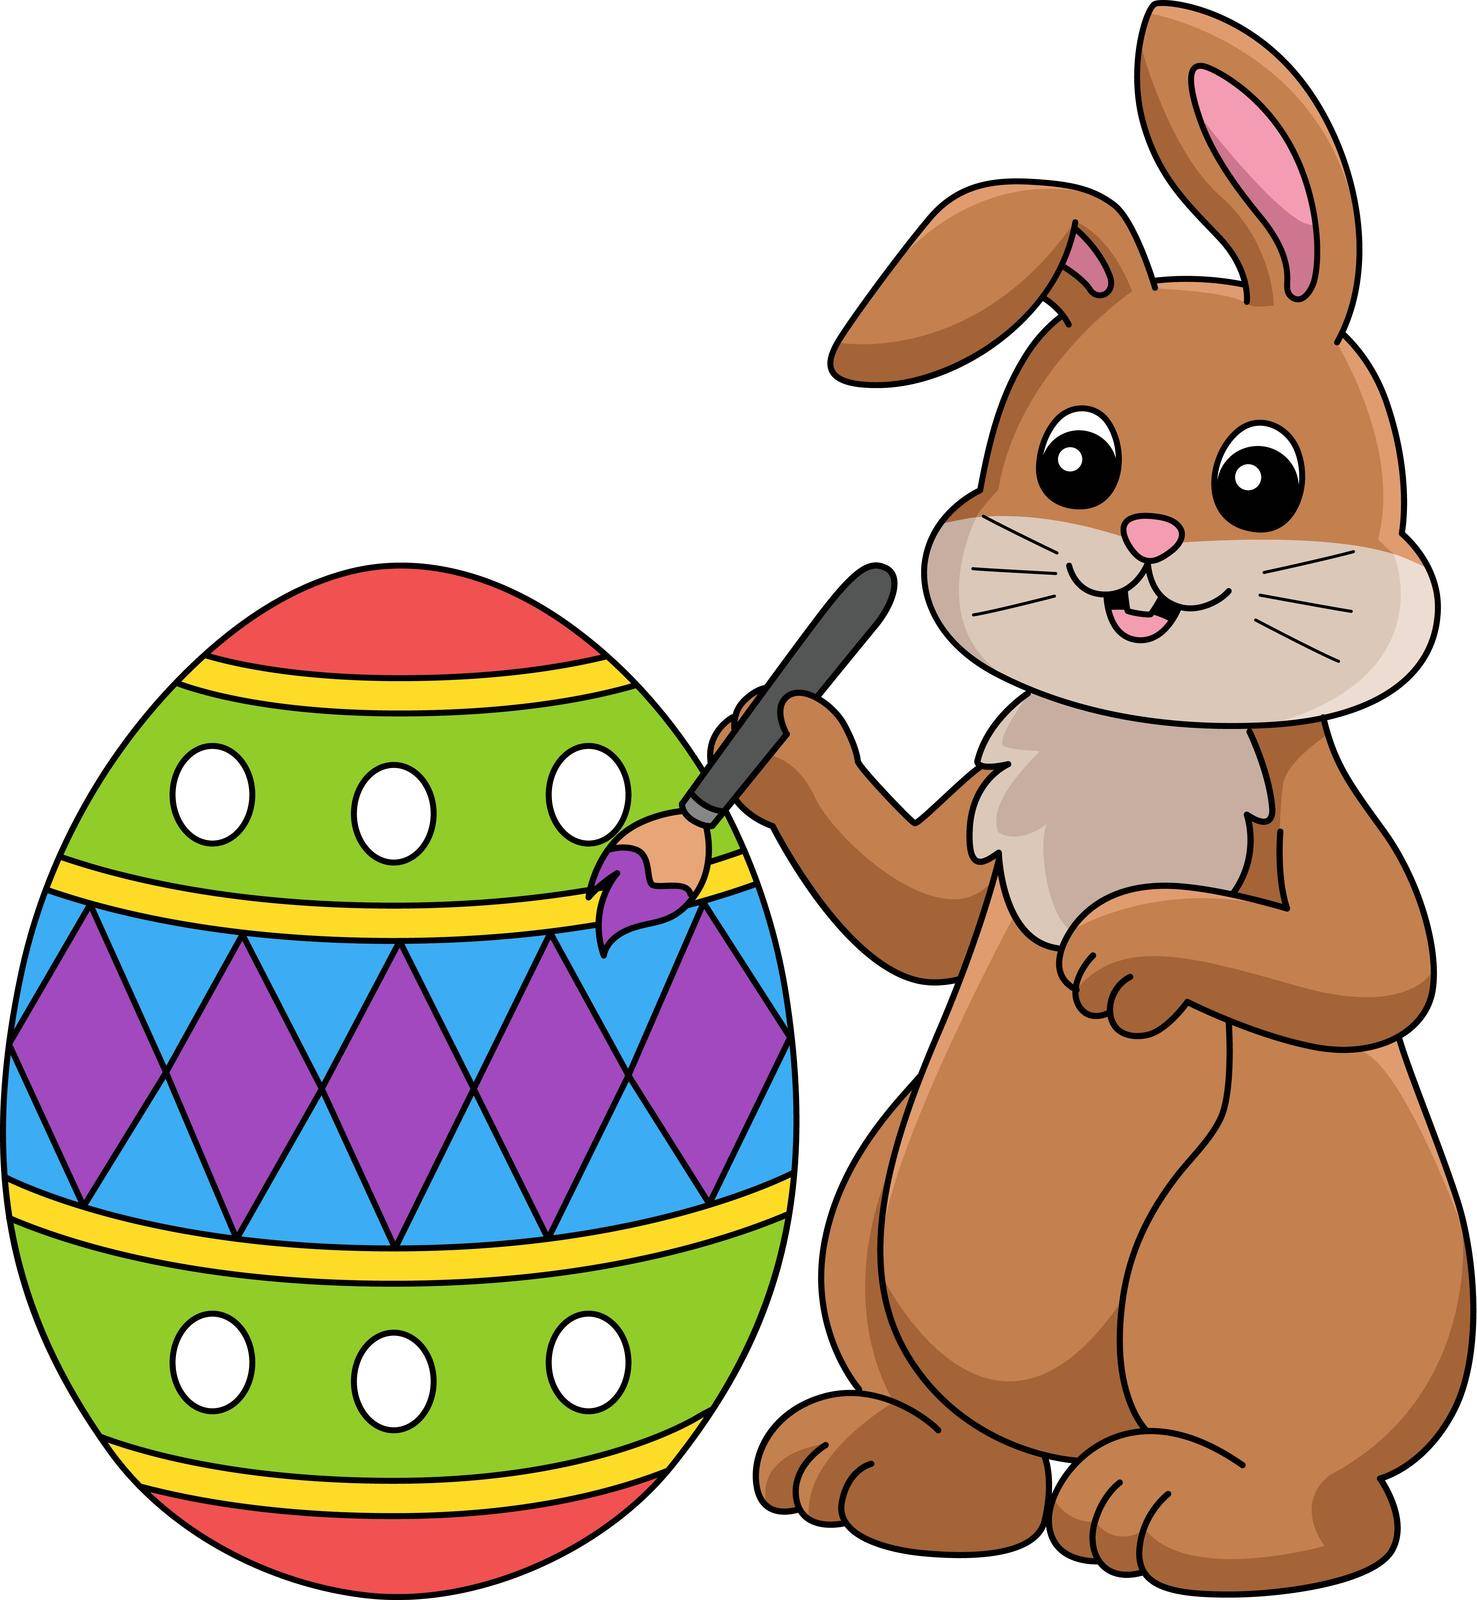 Rabbit Painting Easter Egg Cartoon Illustration by abbydesign